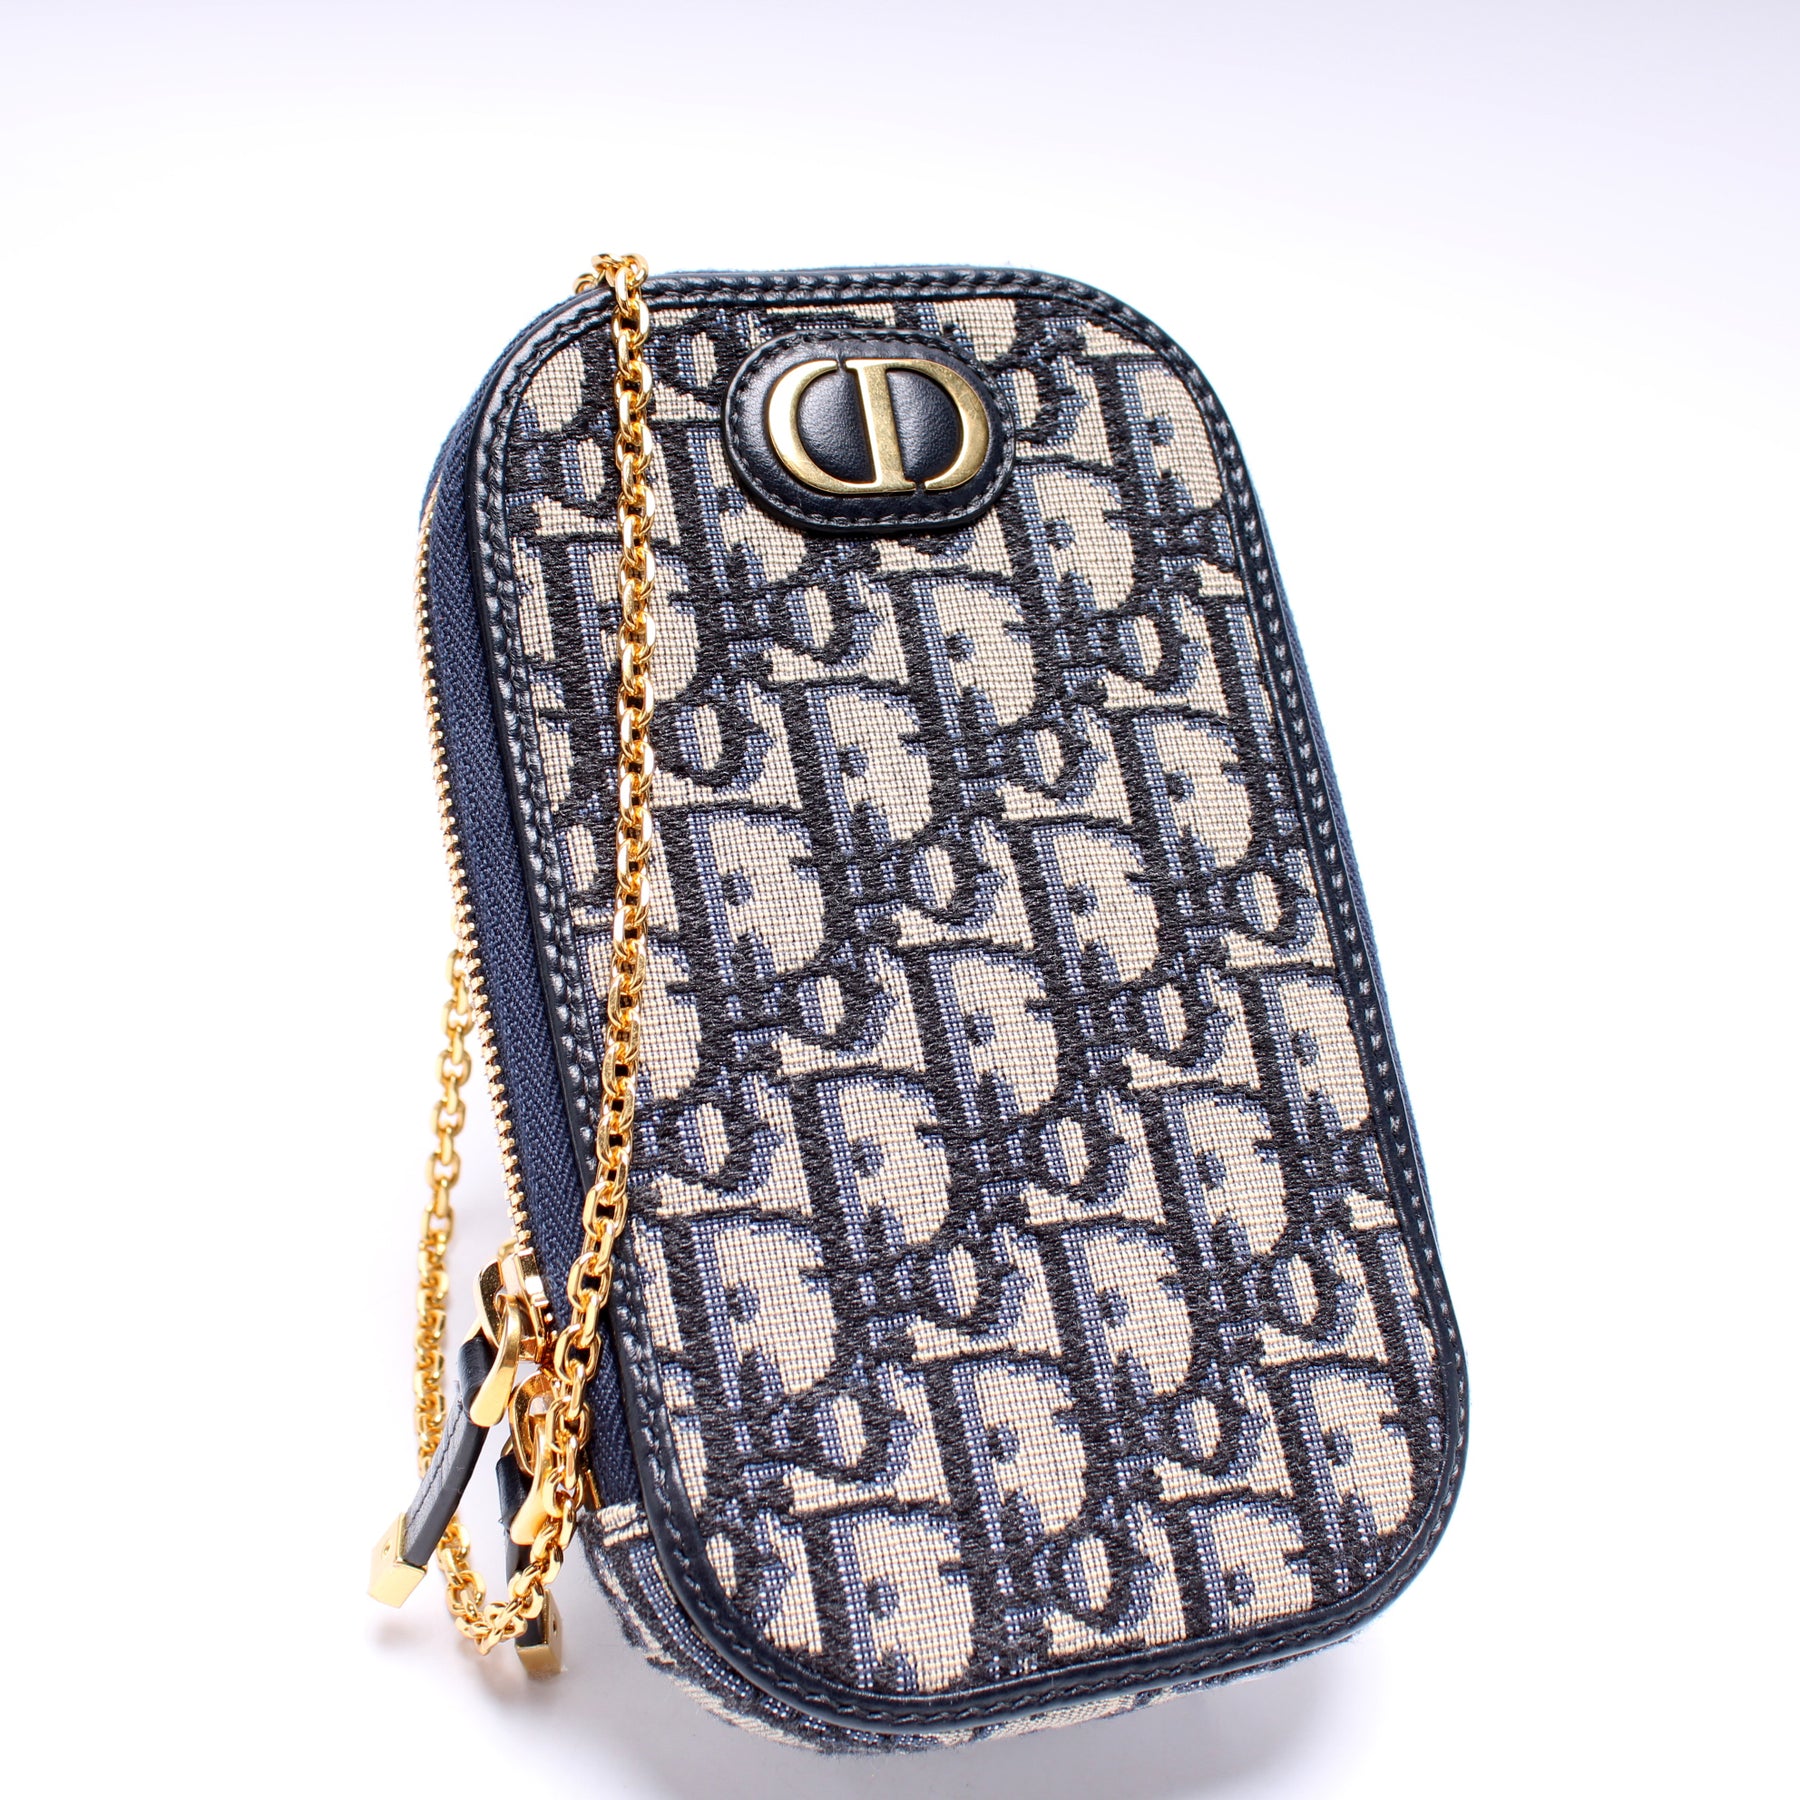 Dior Authenticated 30 Montaigne Leather Handbag